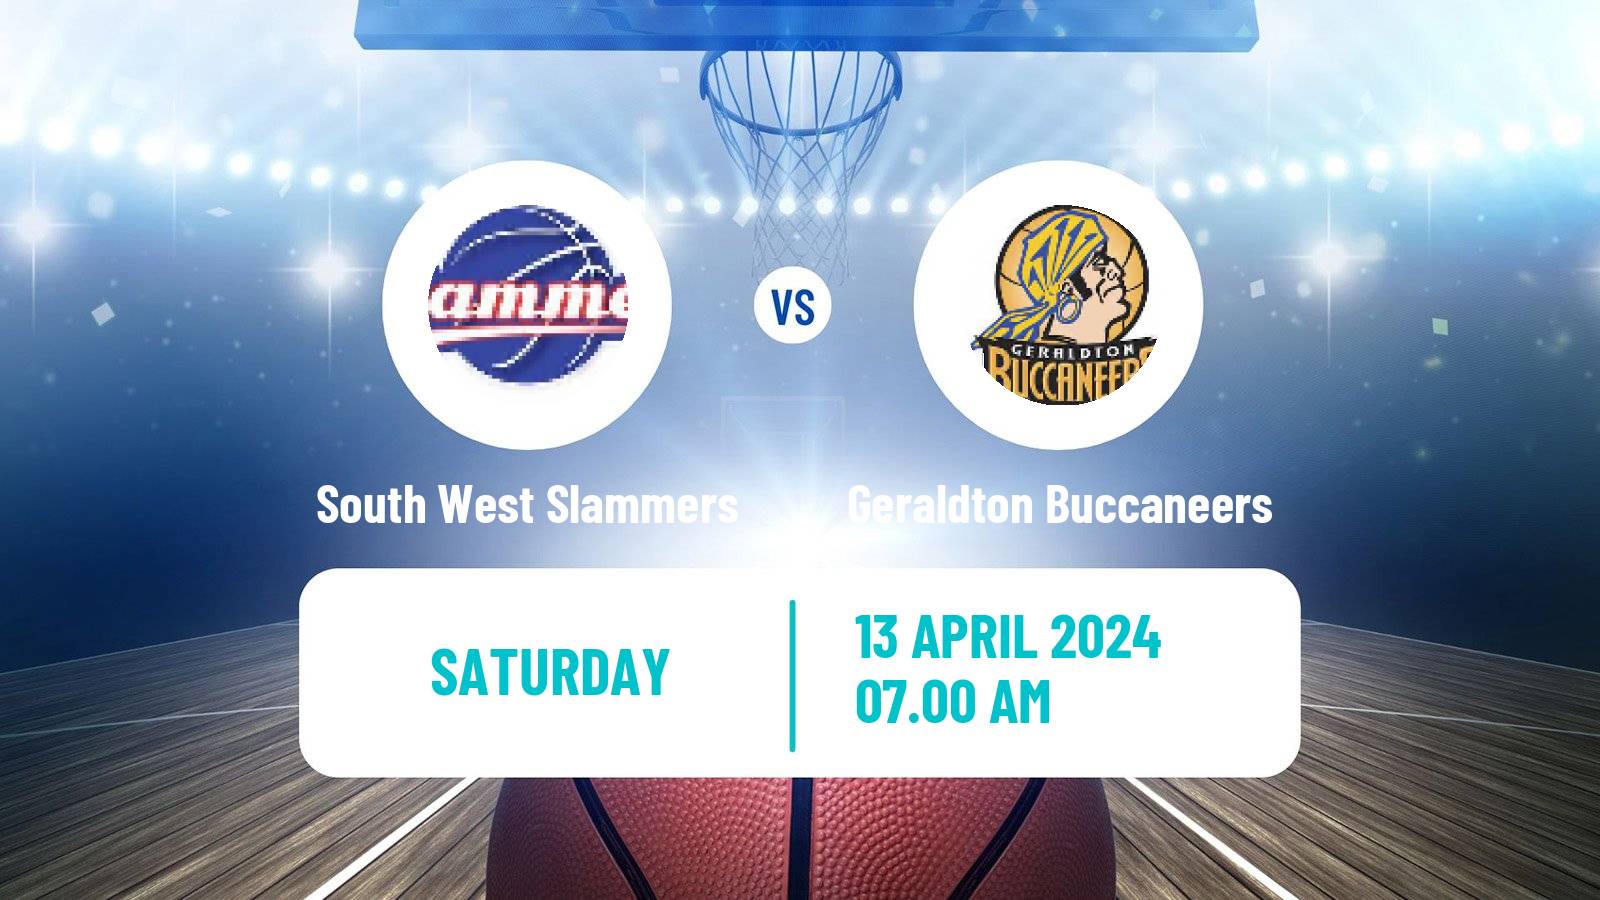 Basketball Australian NBL1 West South West Slammers - Geraldton Buccaneers